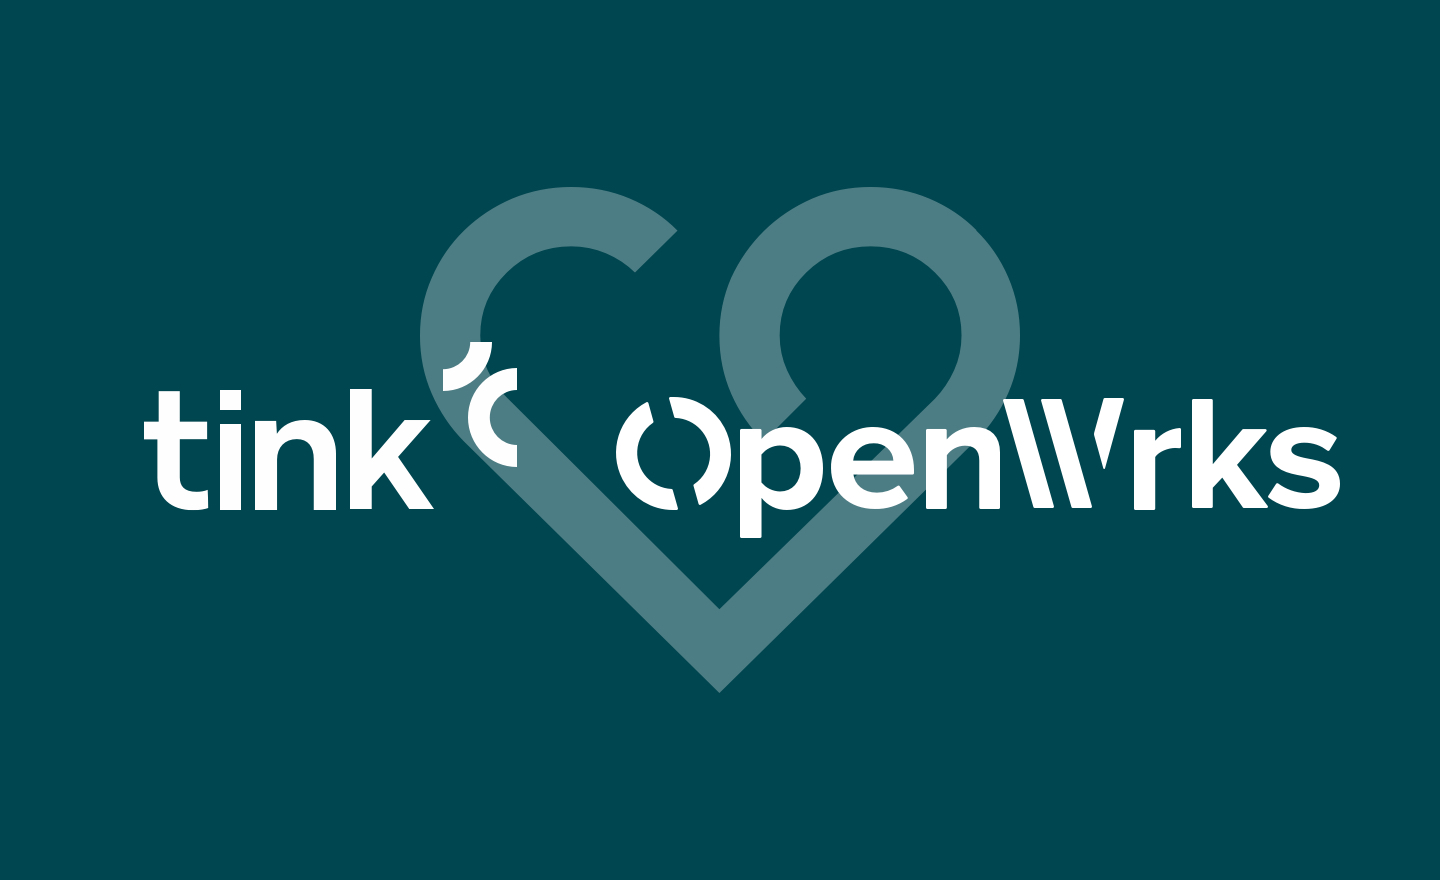 Tink and Openwrks